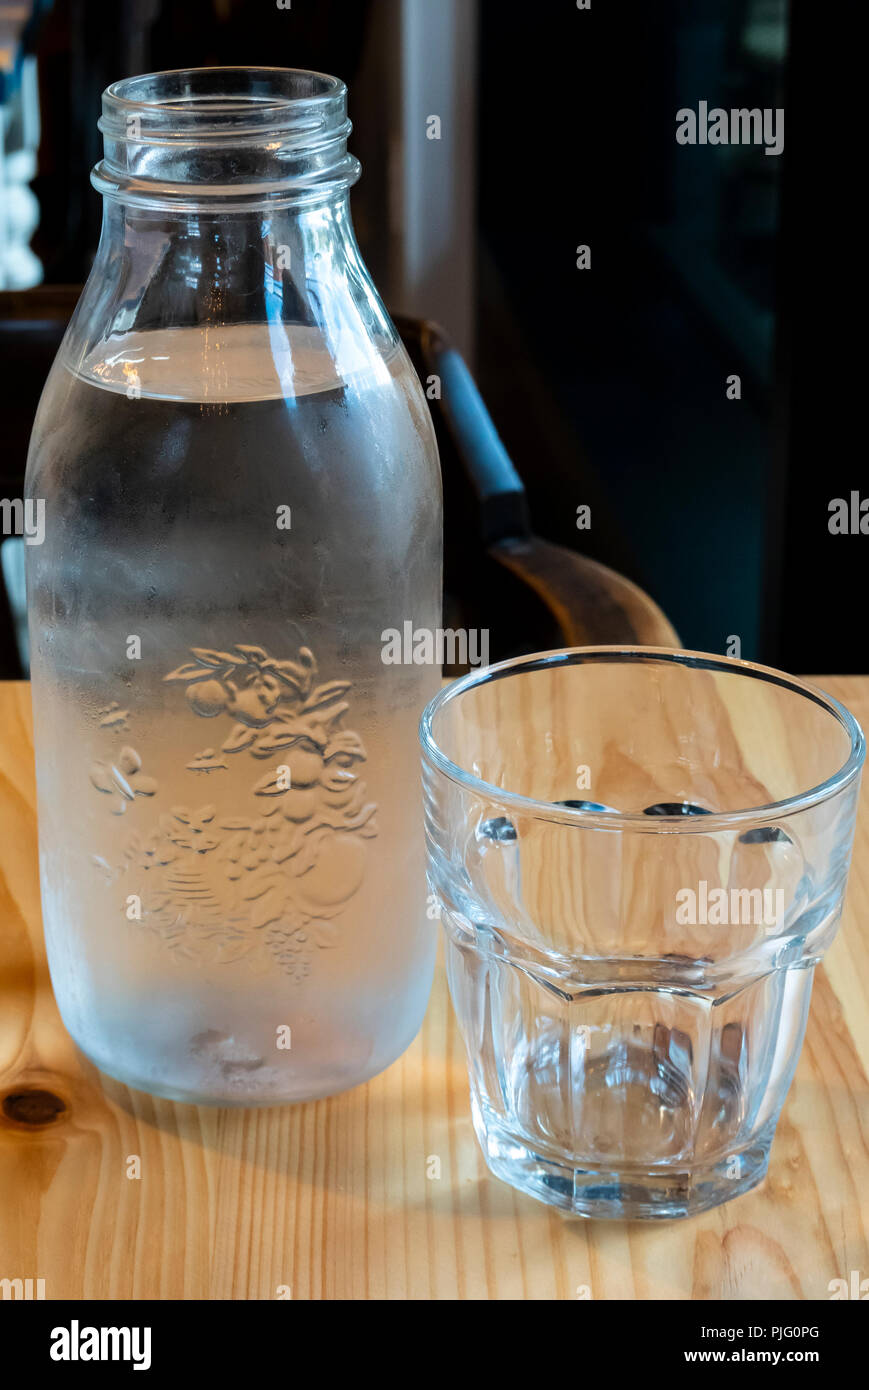 https://c8.alamy.com/compes/pjg0pg/diseno-elegante-botella-de-agua-fria-y-vidrio-sobre-una-mesa-de-restaurante-pjg0pg.jpg